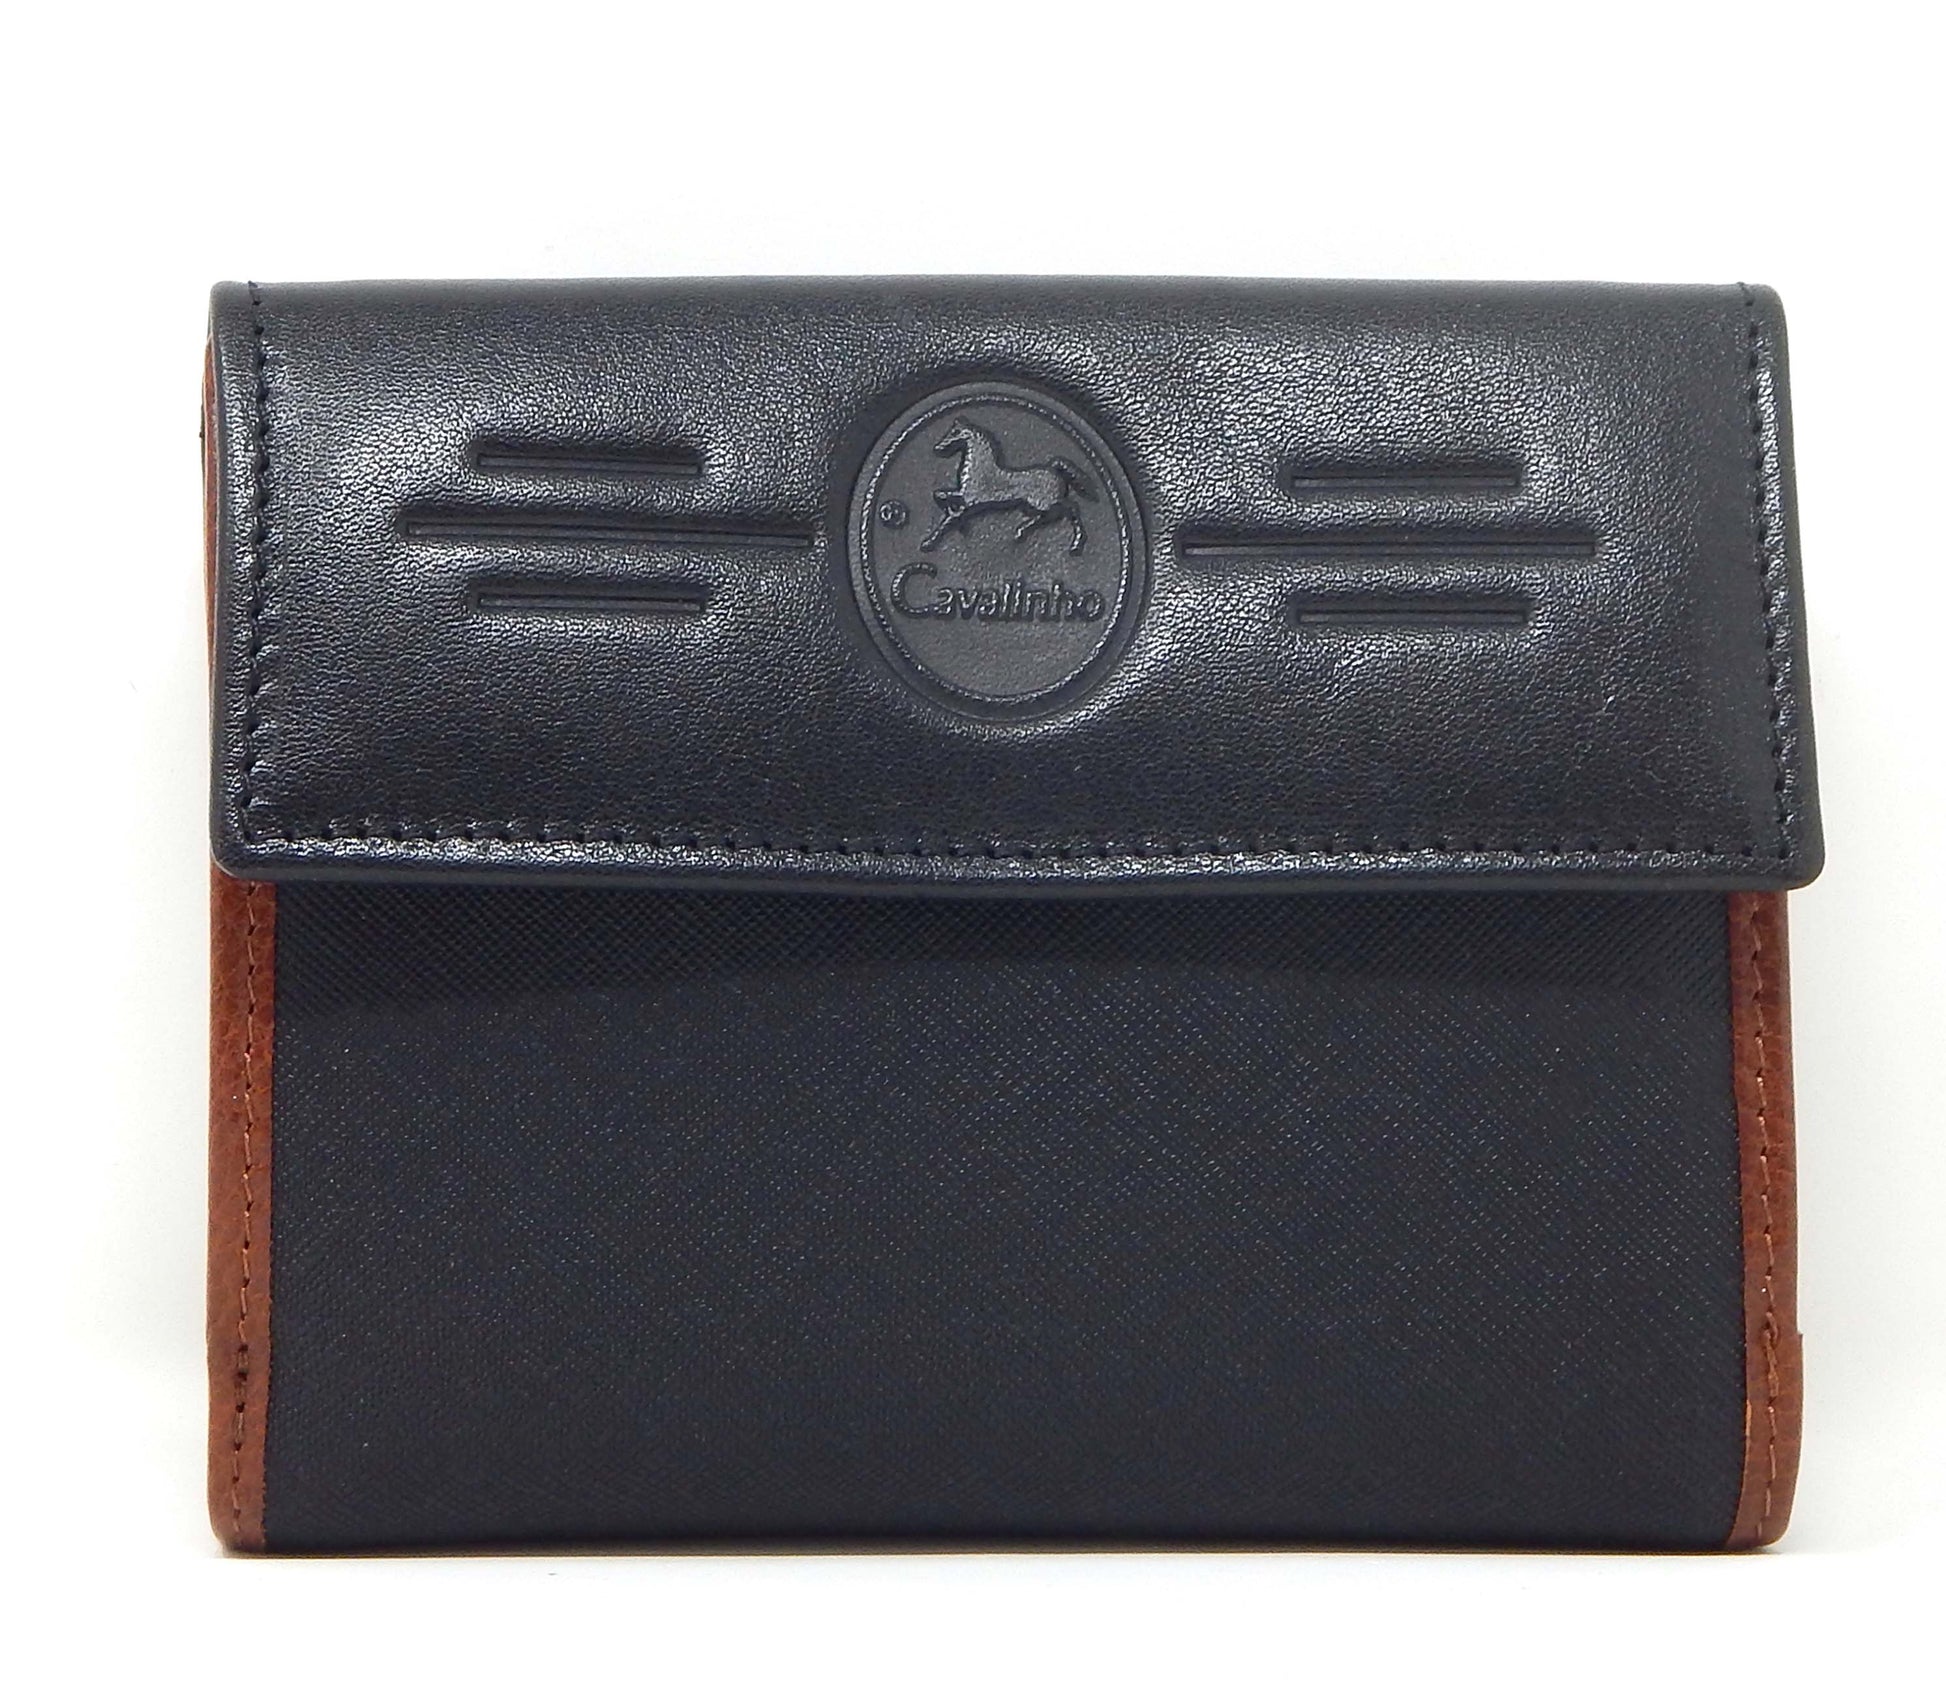 Cavalinho Unique Wallet - Black & Honey - 28260215.32.99_3